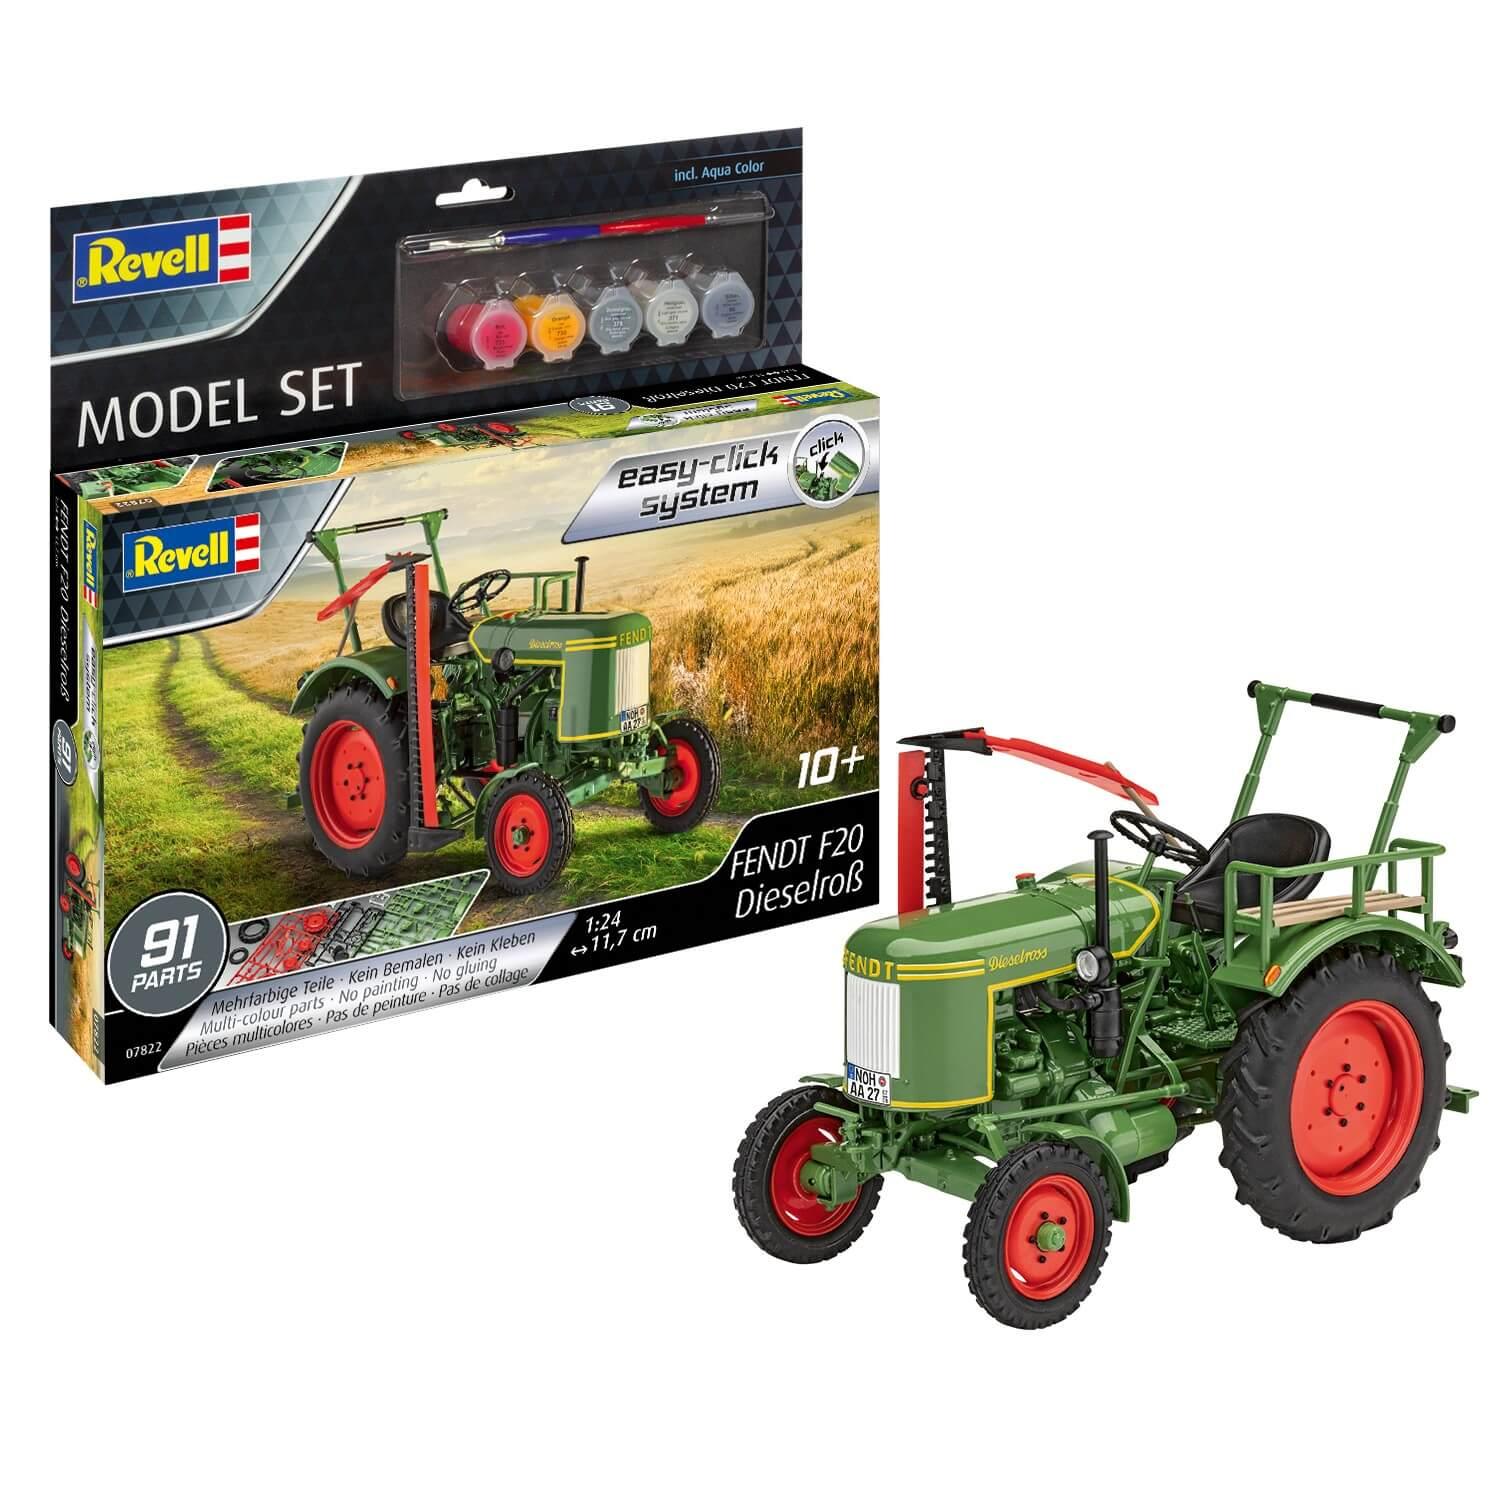 maquette tracteur : model set : fendt f20 dieselroã